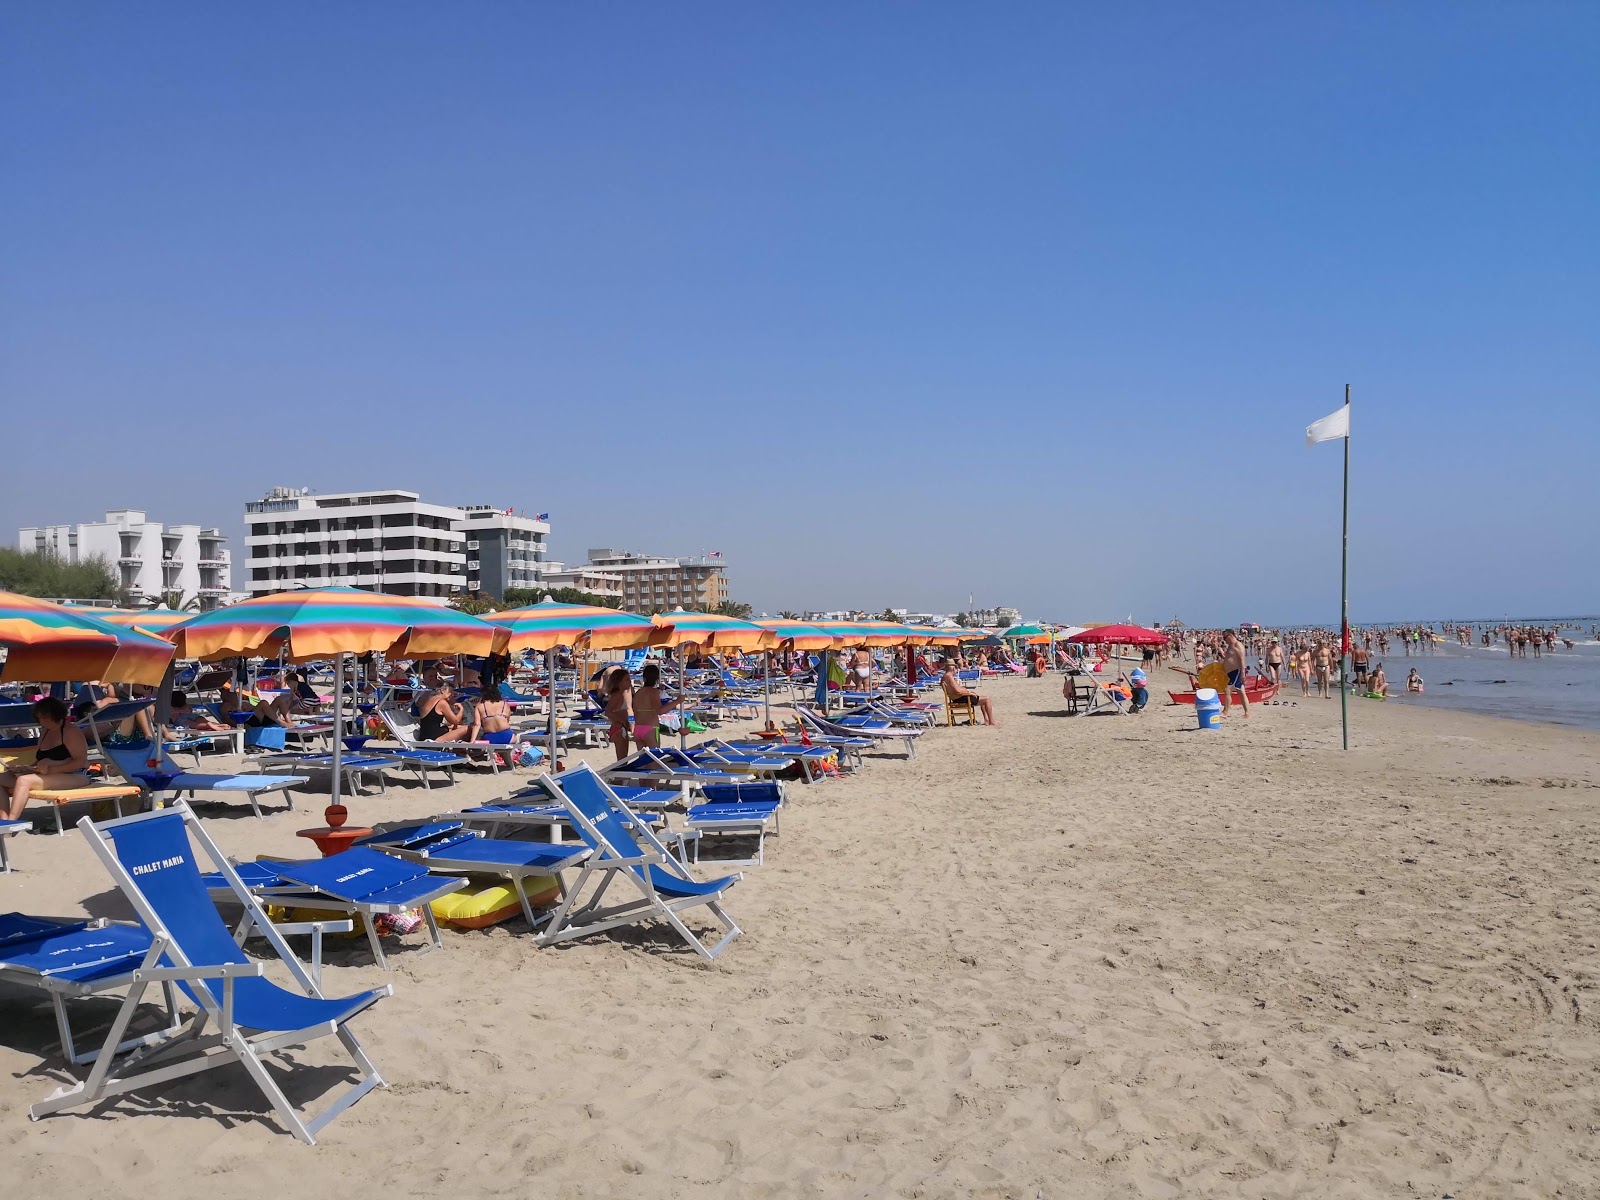 Foto von Spiaggia di Villa Rosa mit heller sand Oberfläche